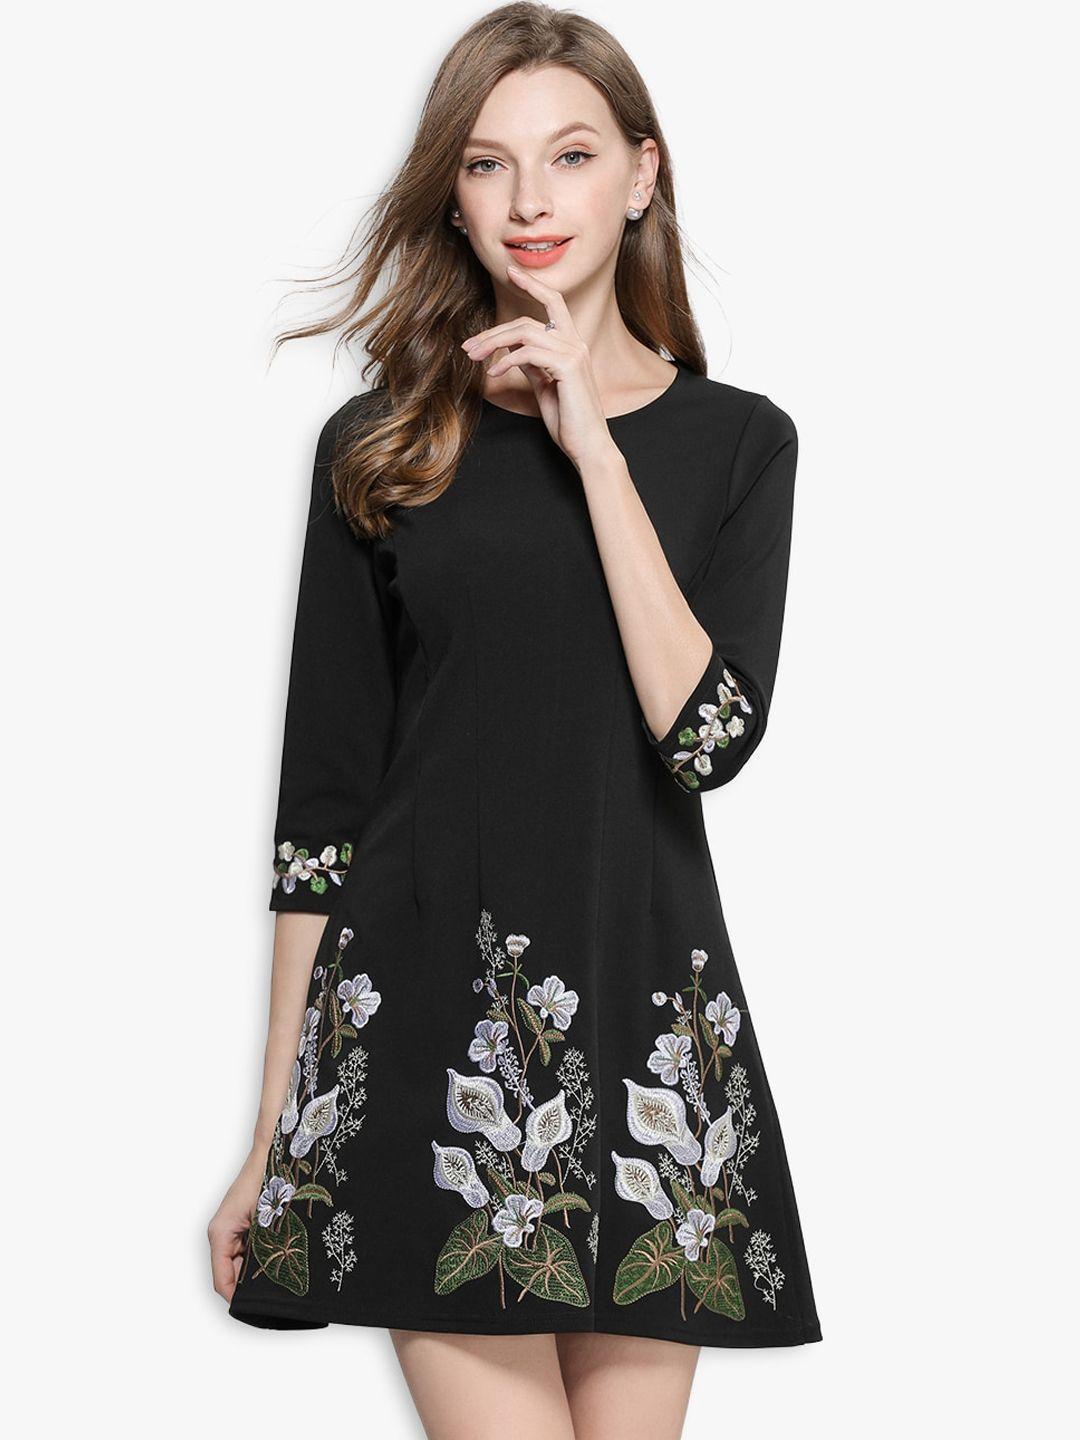 jc collection black floral mini dress